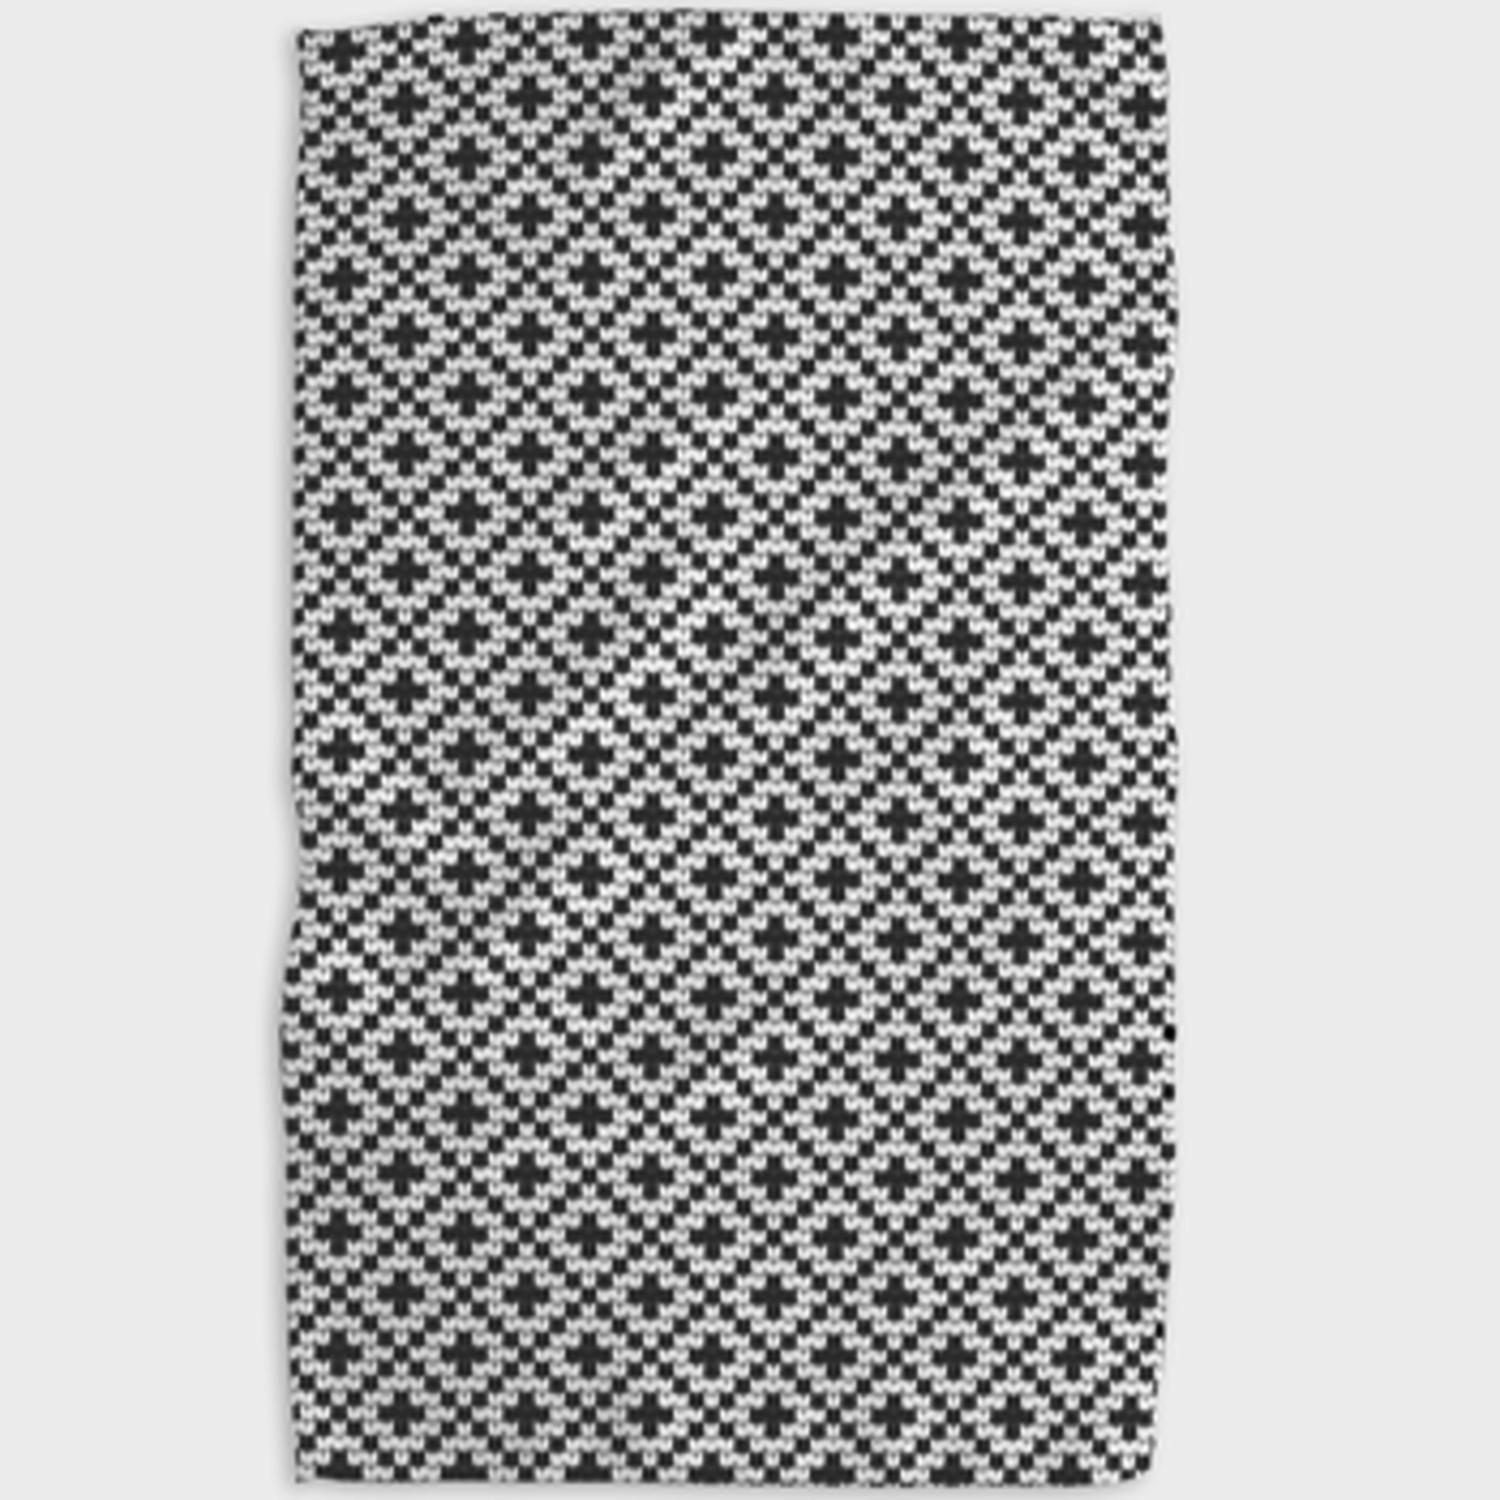 20 x 28 Printed Dot Tea Towel - Black & White